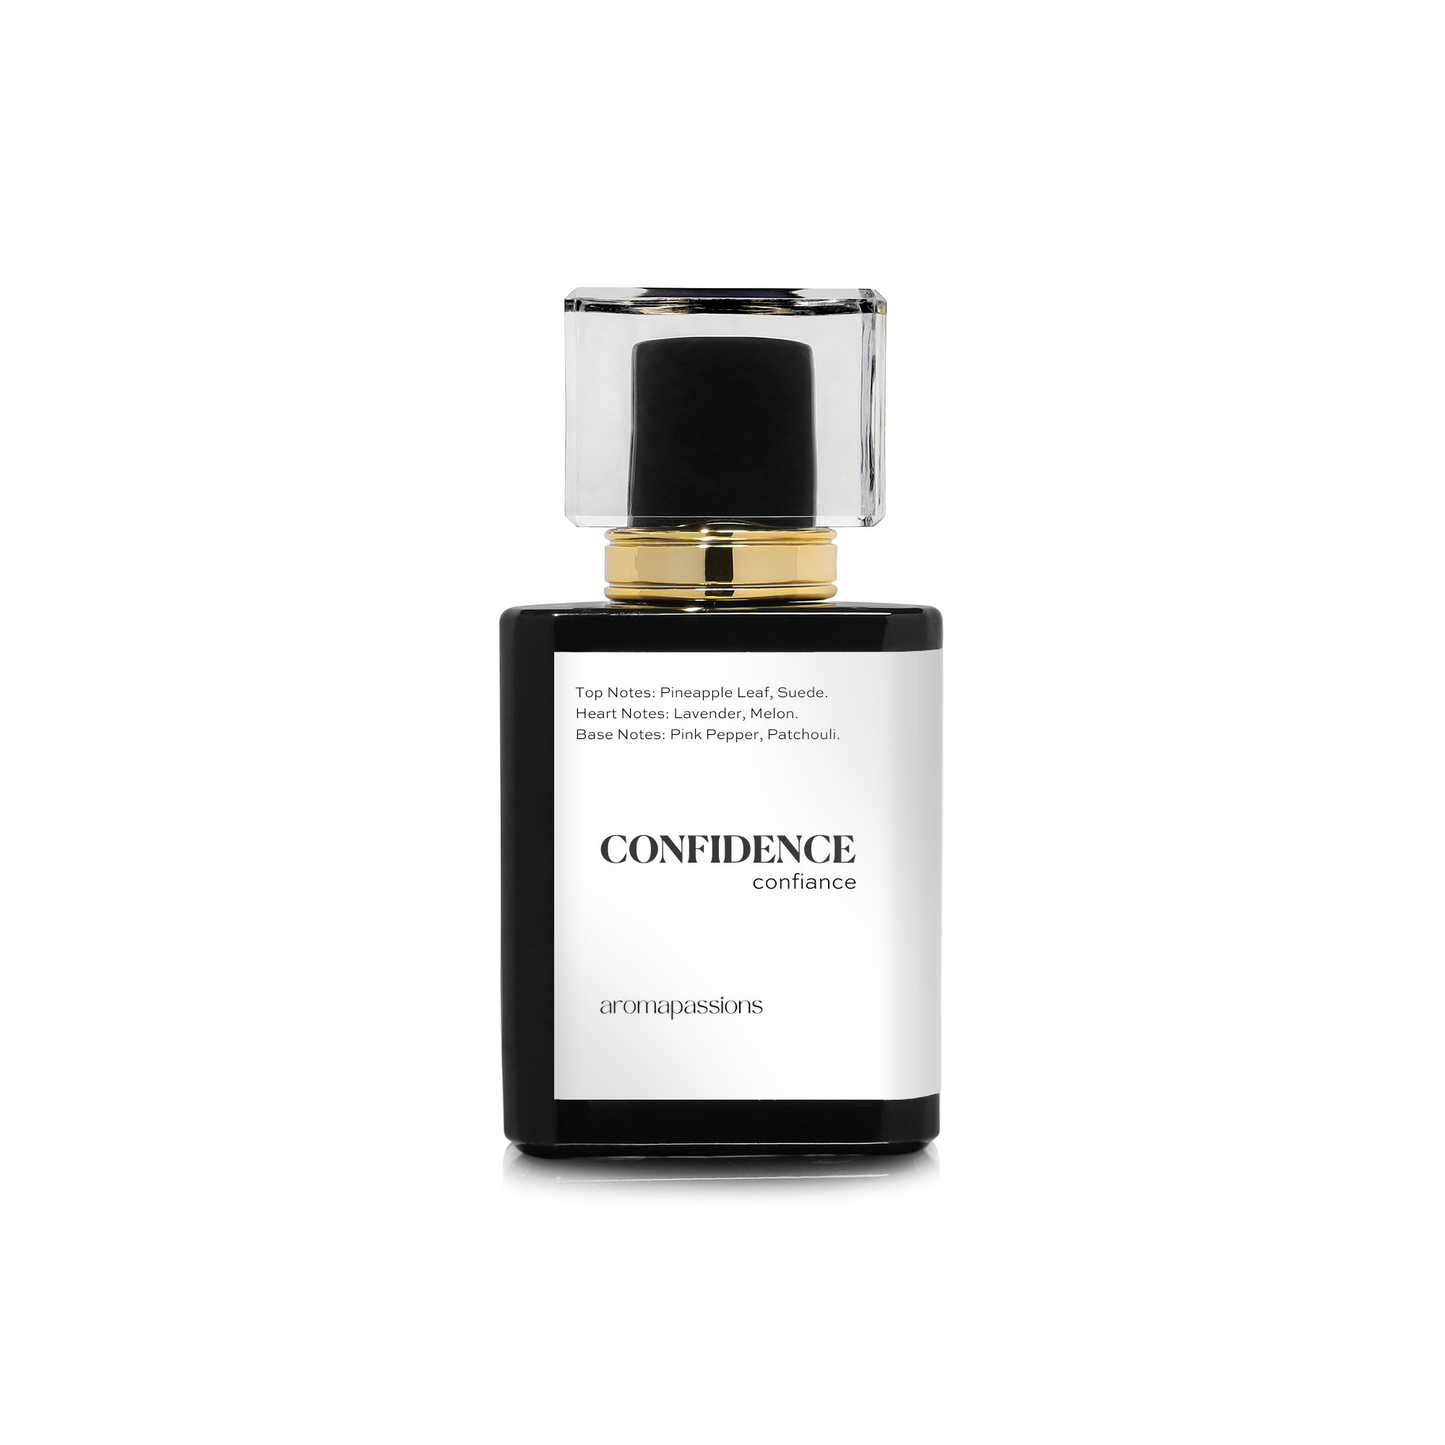 CONFIDENCE | Inspired by JIMMY CHOO MAN | Jimmy Choo Dupe Pheromone Perfume